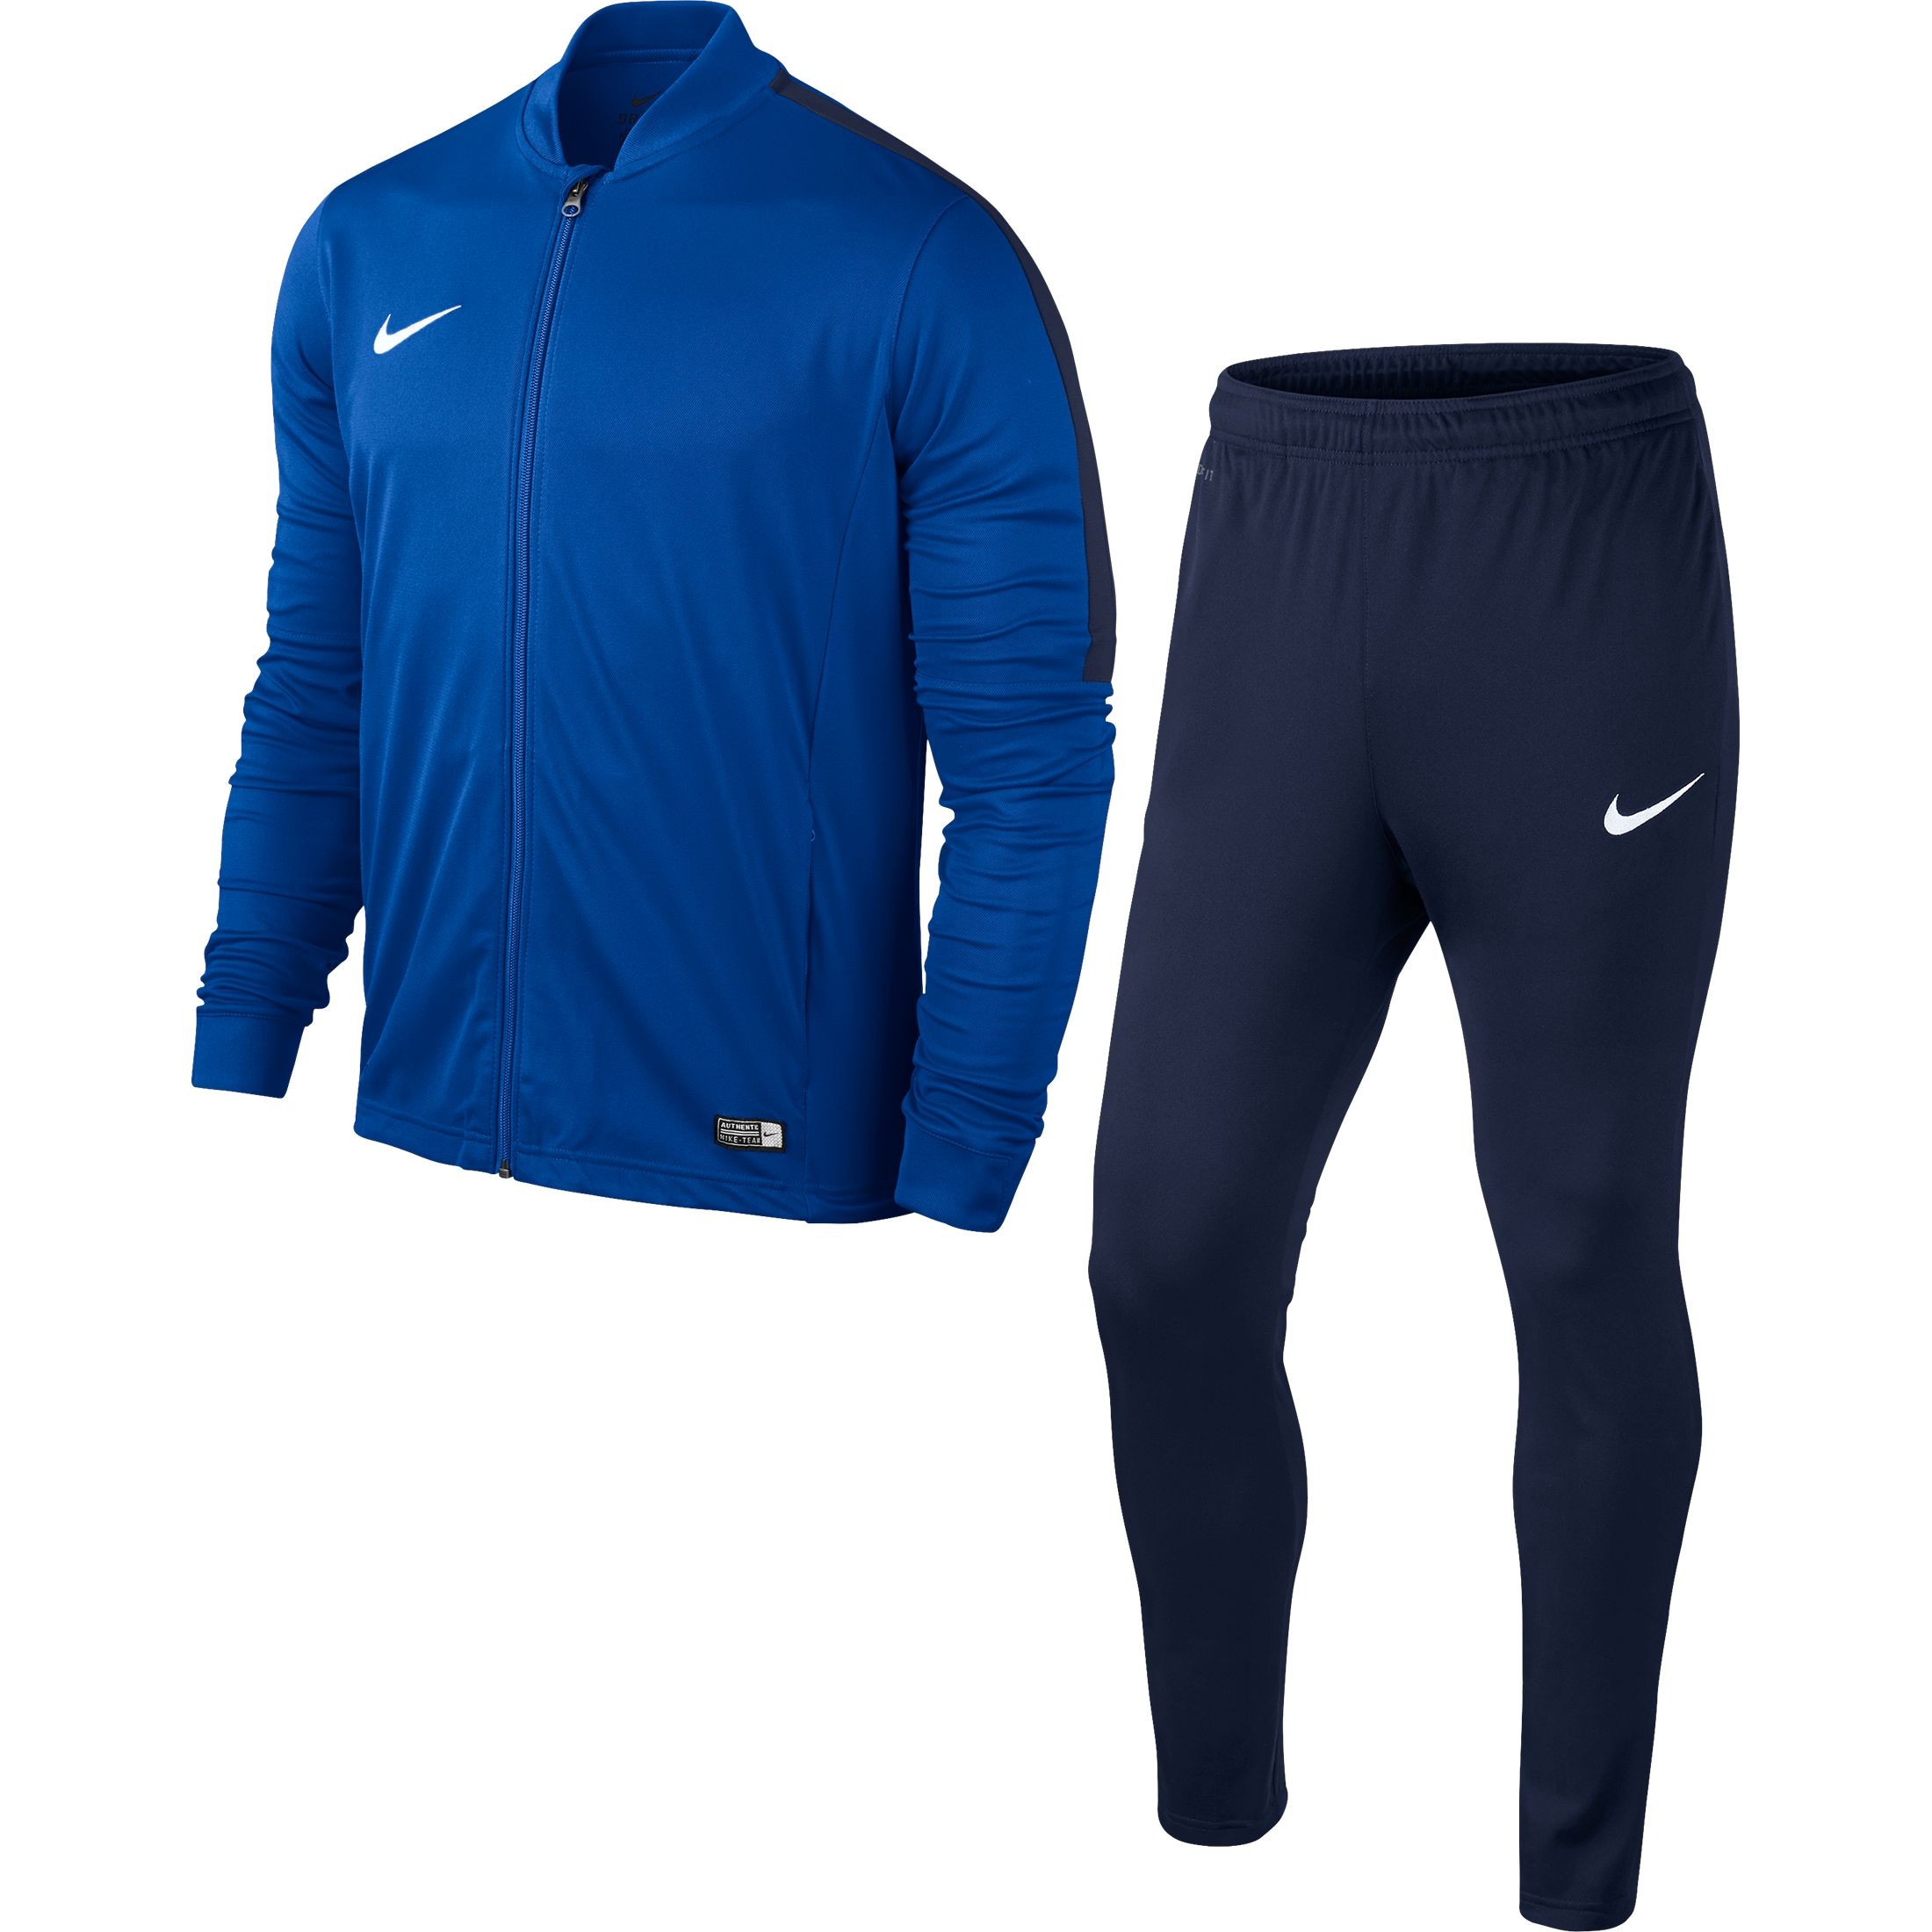 jogging nike homme bleu marine, Nike ensemble jogging